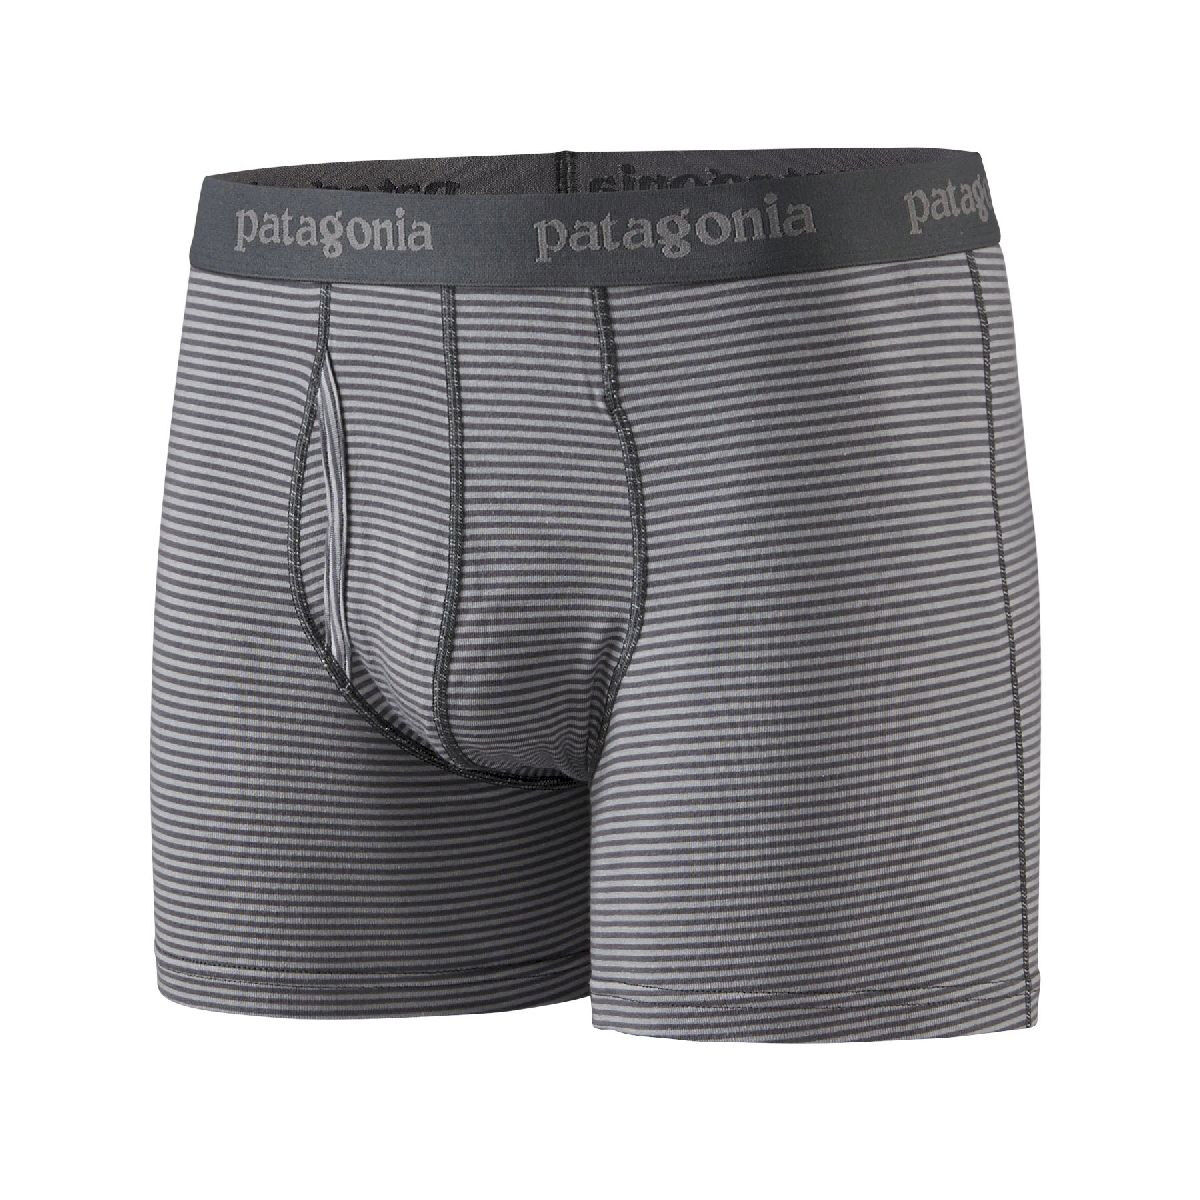 Patagonia Essential Boxer Briefs - 3" - Undertøj